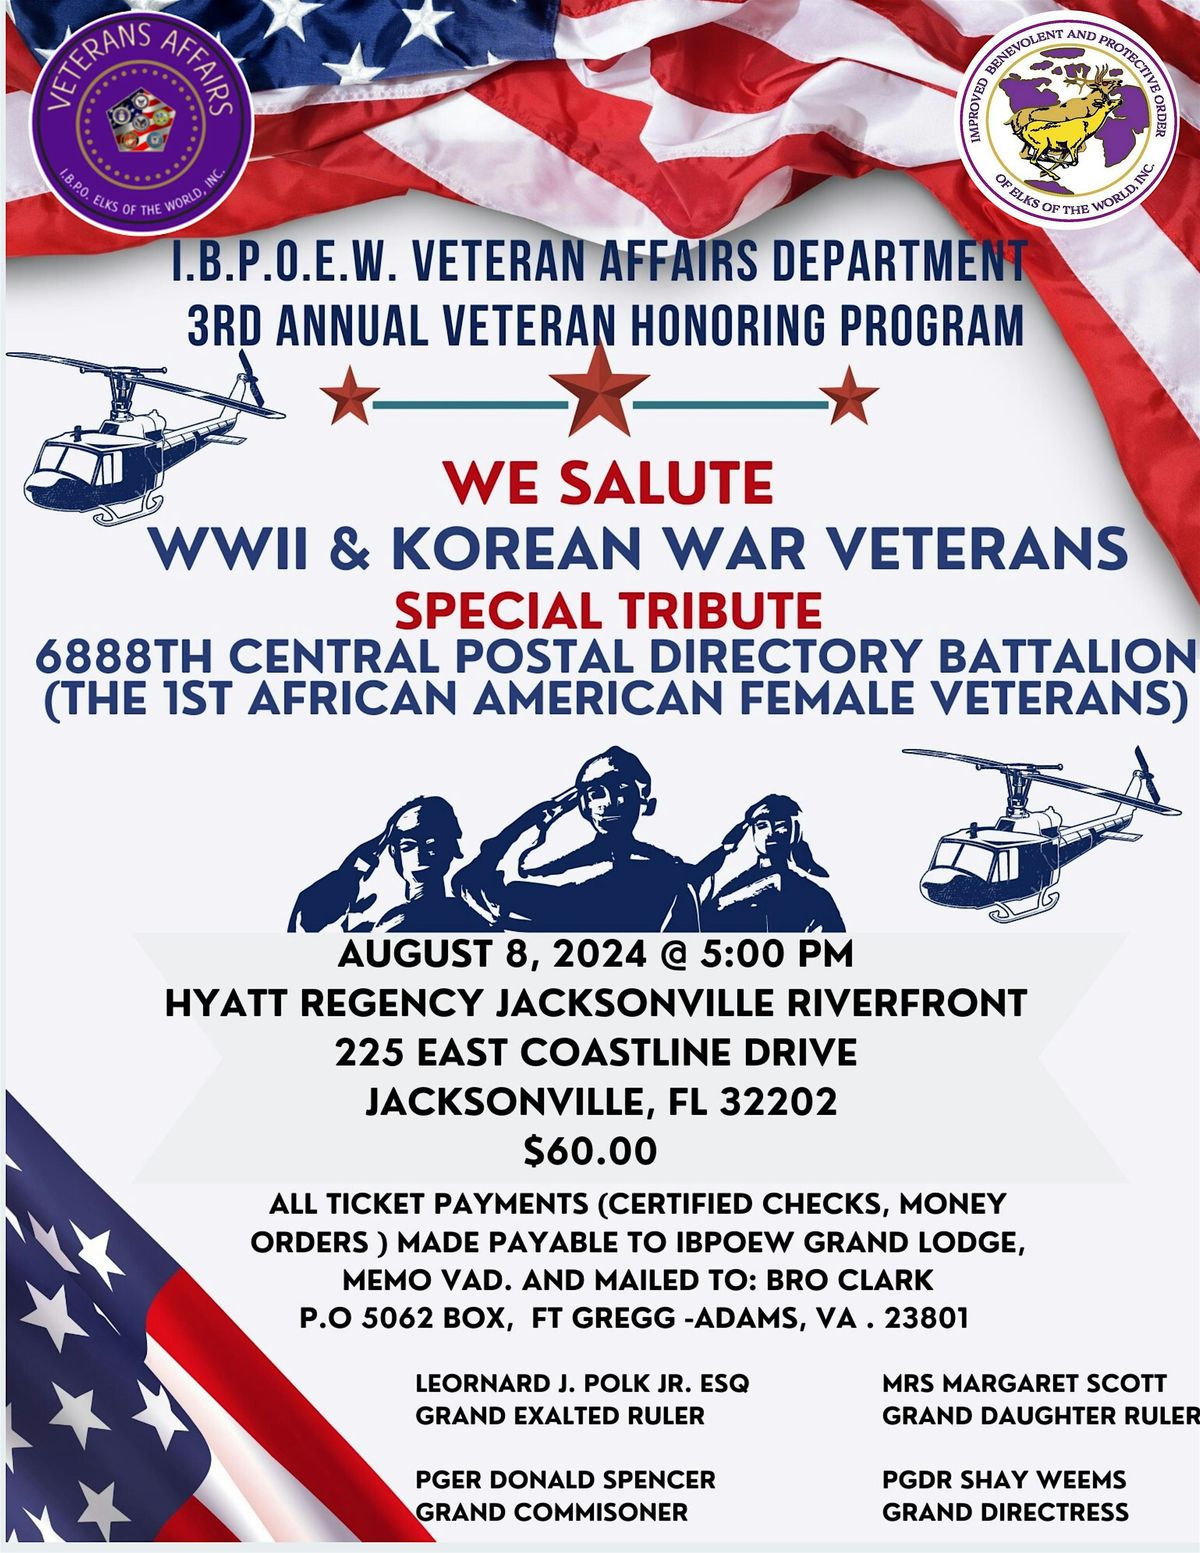 Grand Lodge Veterans Affairs - 3rd Annual Veterans Honoring Program